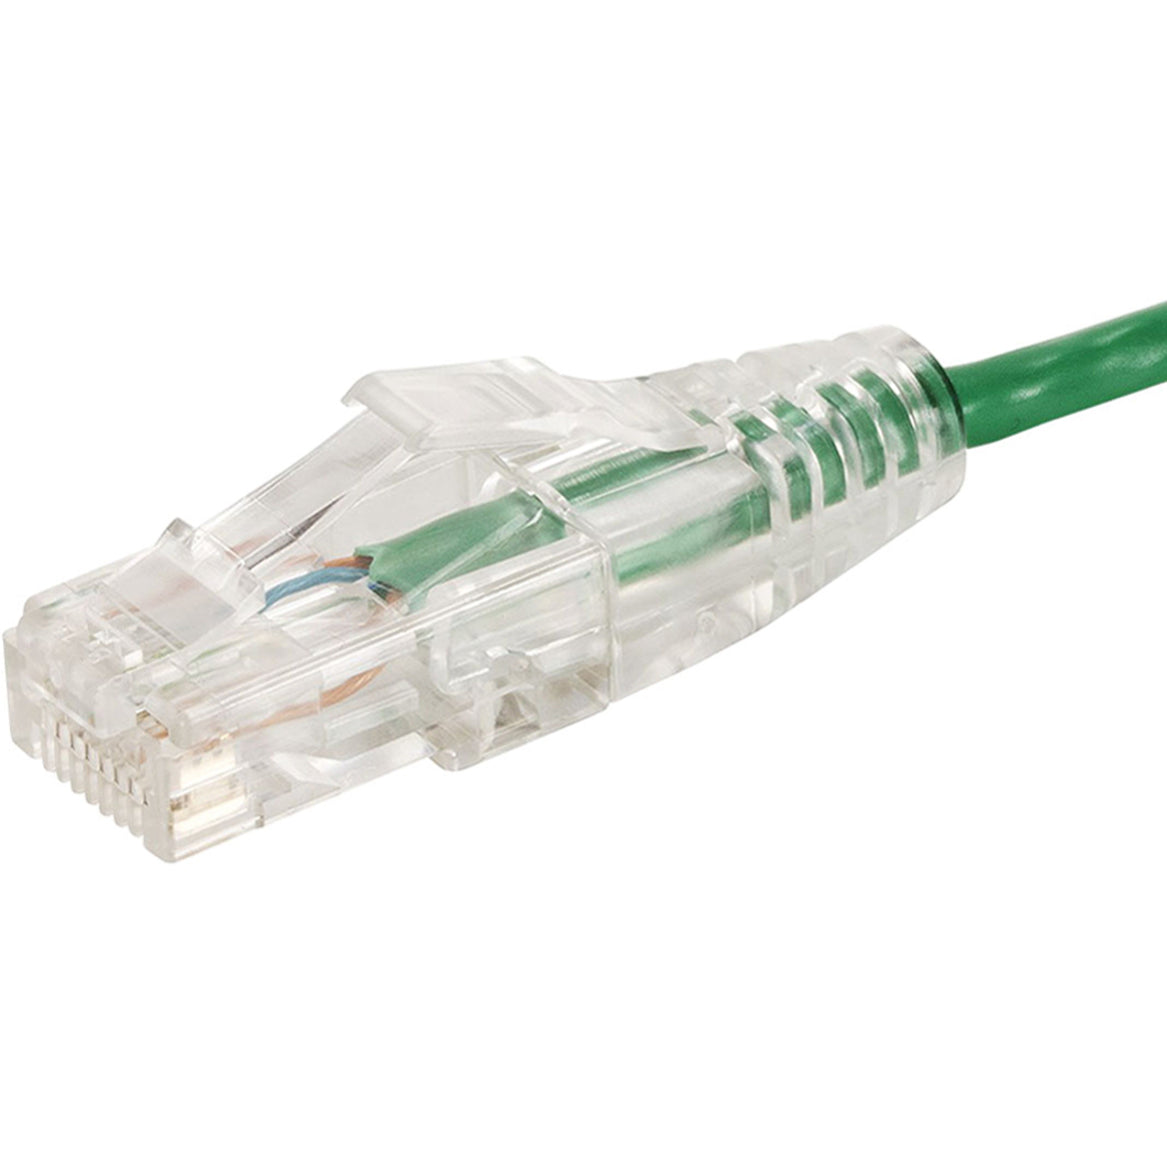 Monoprice 14812 SlimRun Cat6 28AWG UTP Ethernet Network Cable, 5ft Green, Flexible, Snagless